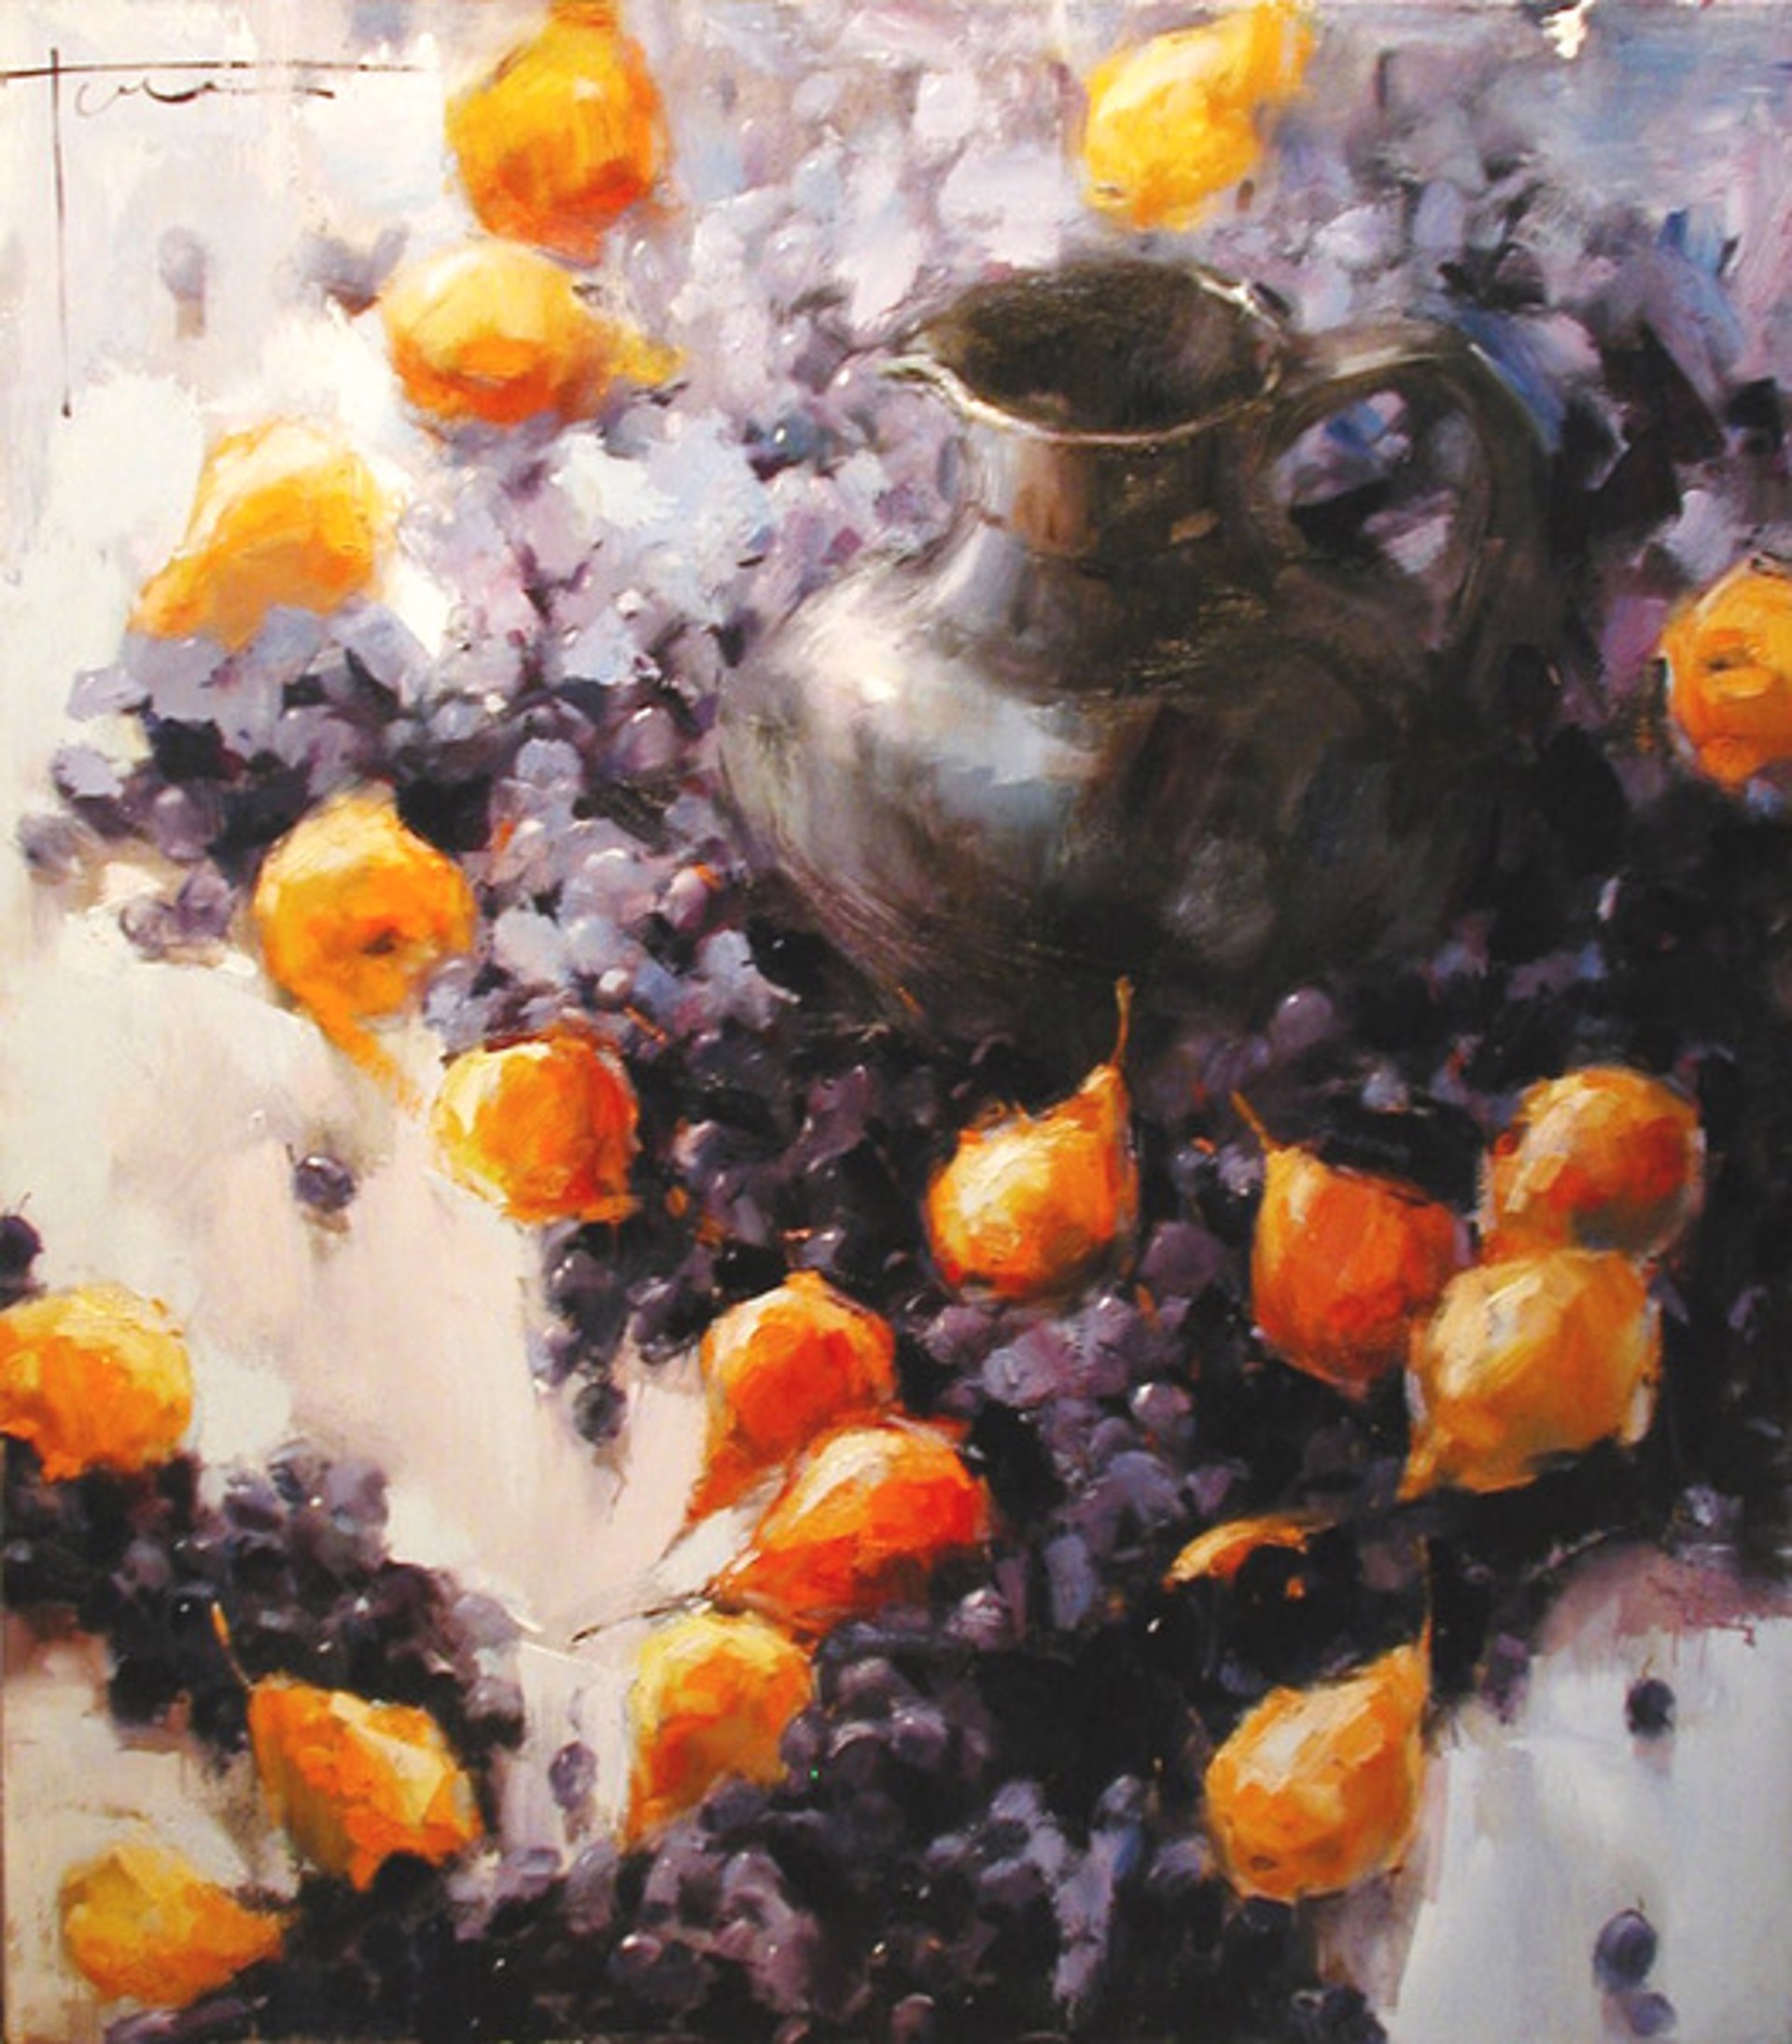 Pears and Grapes by Yana Golubyatnikova